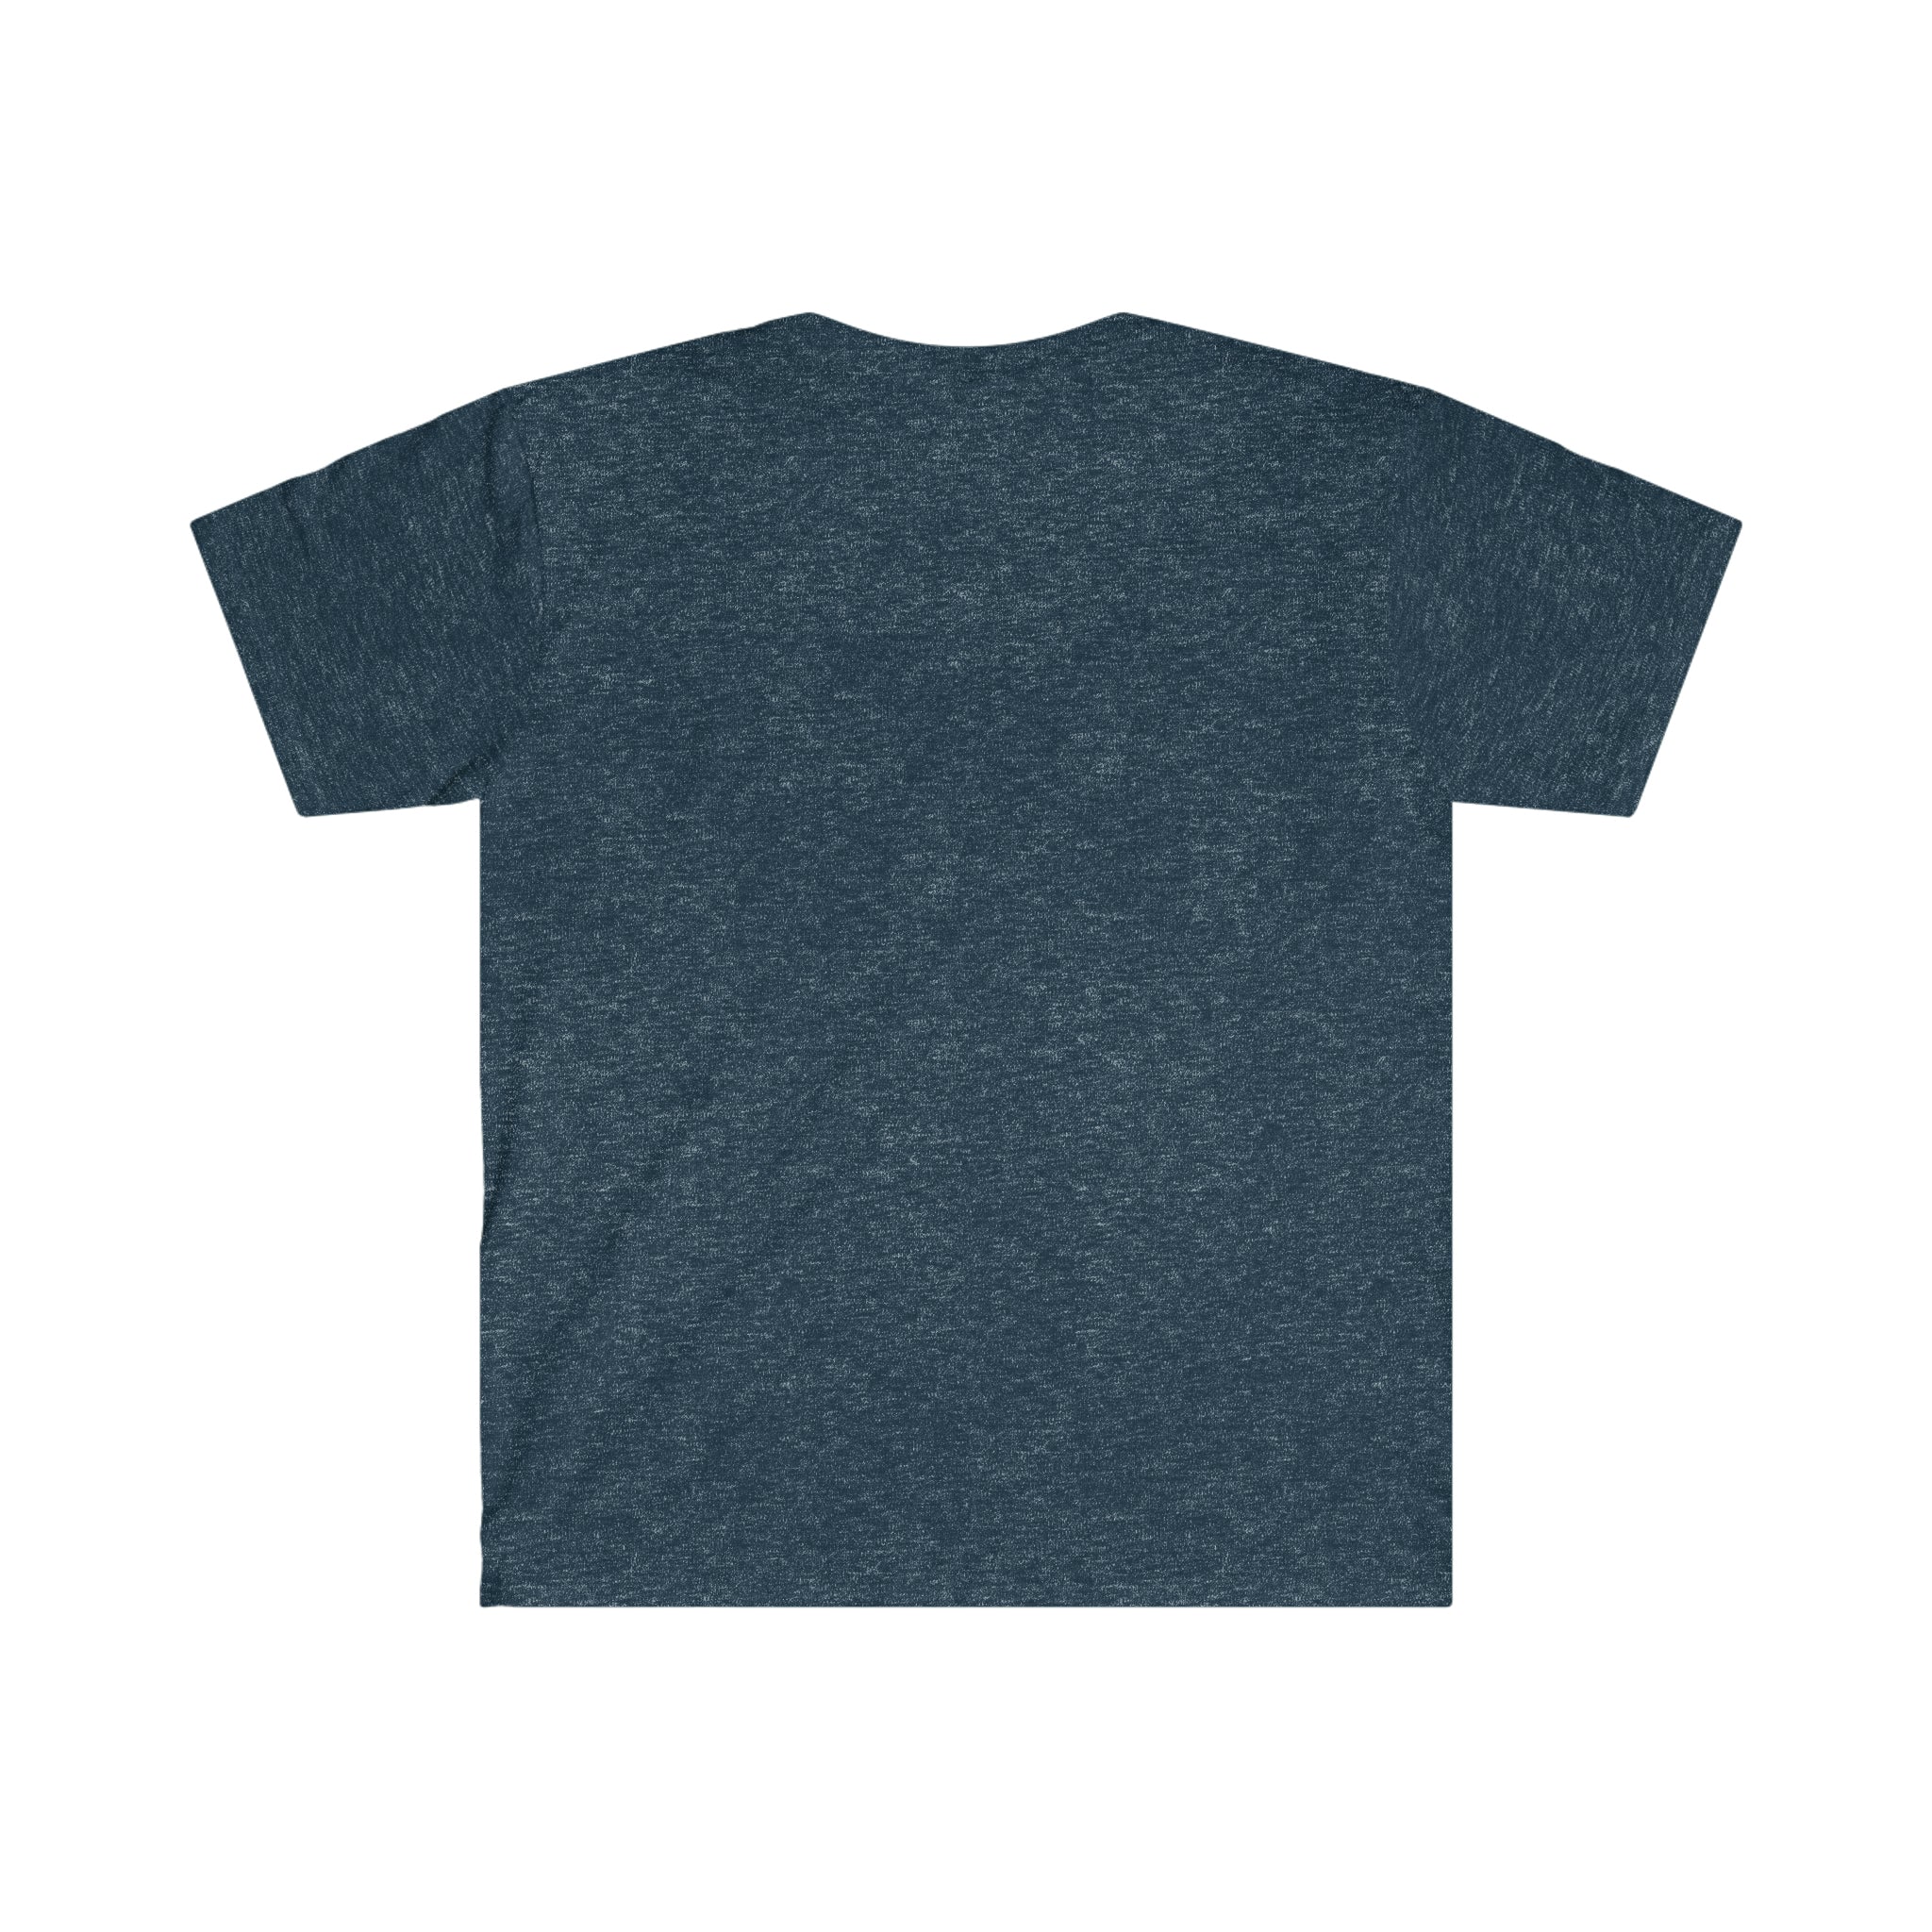 Micro Gainz Never Plateau T-Shirt